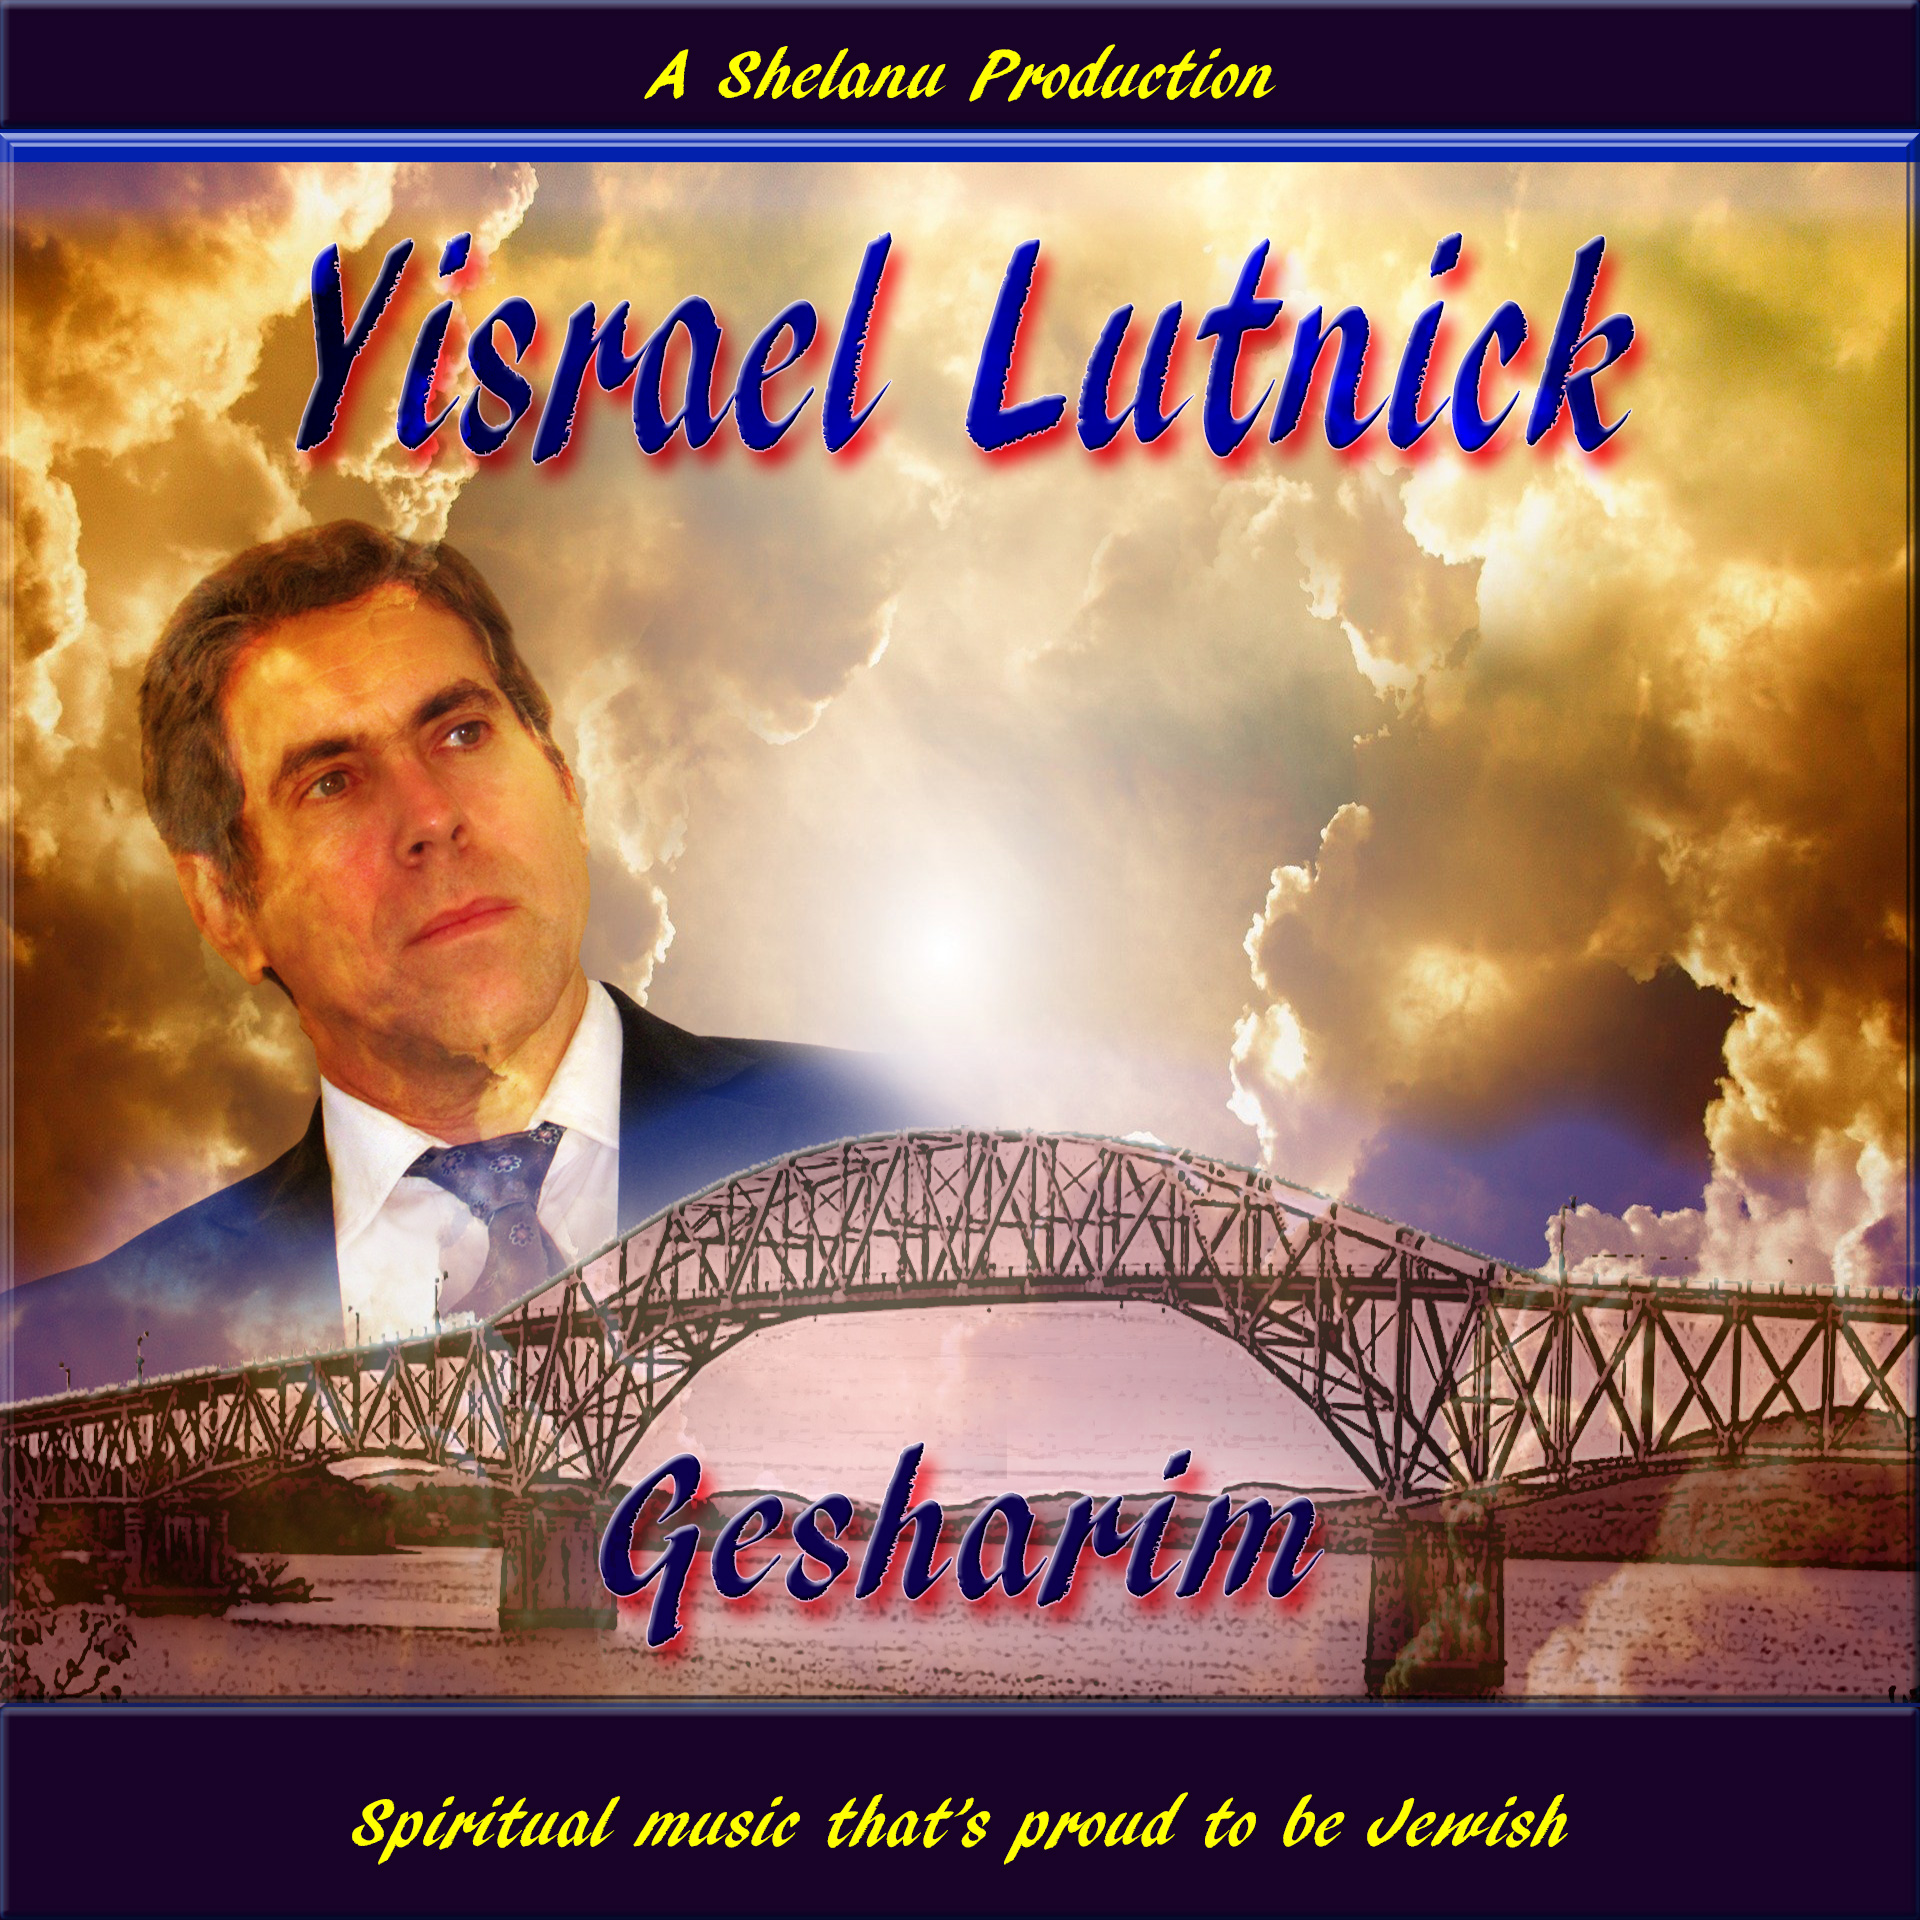 Gesharim, by Yisrael Lutnick. Great Jewish Music